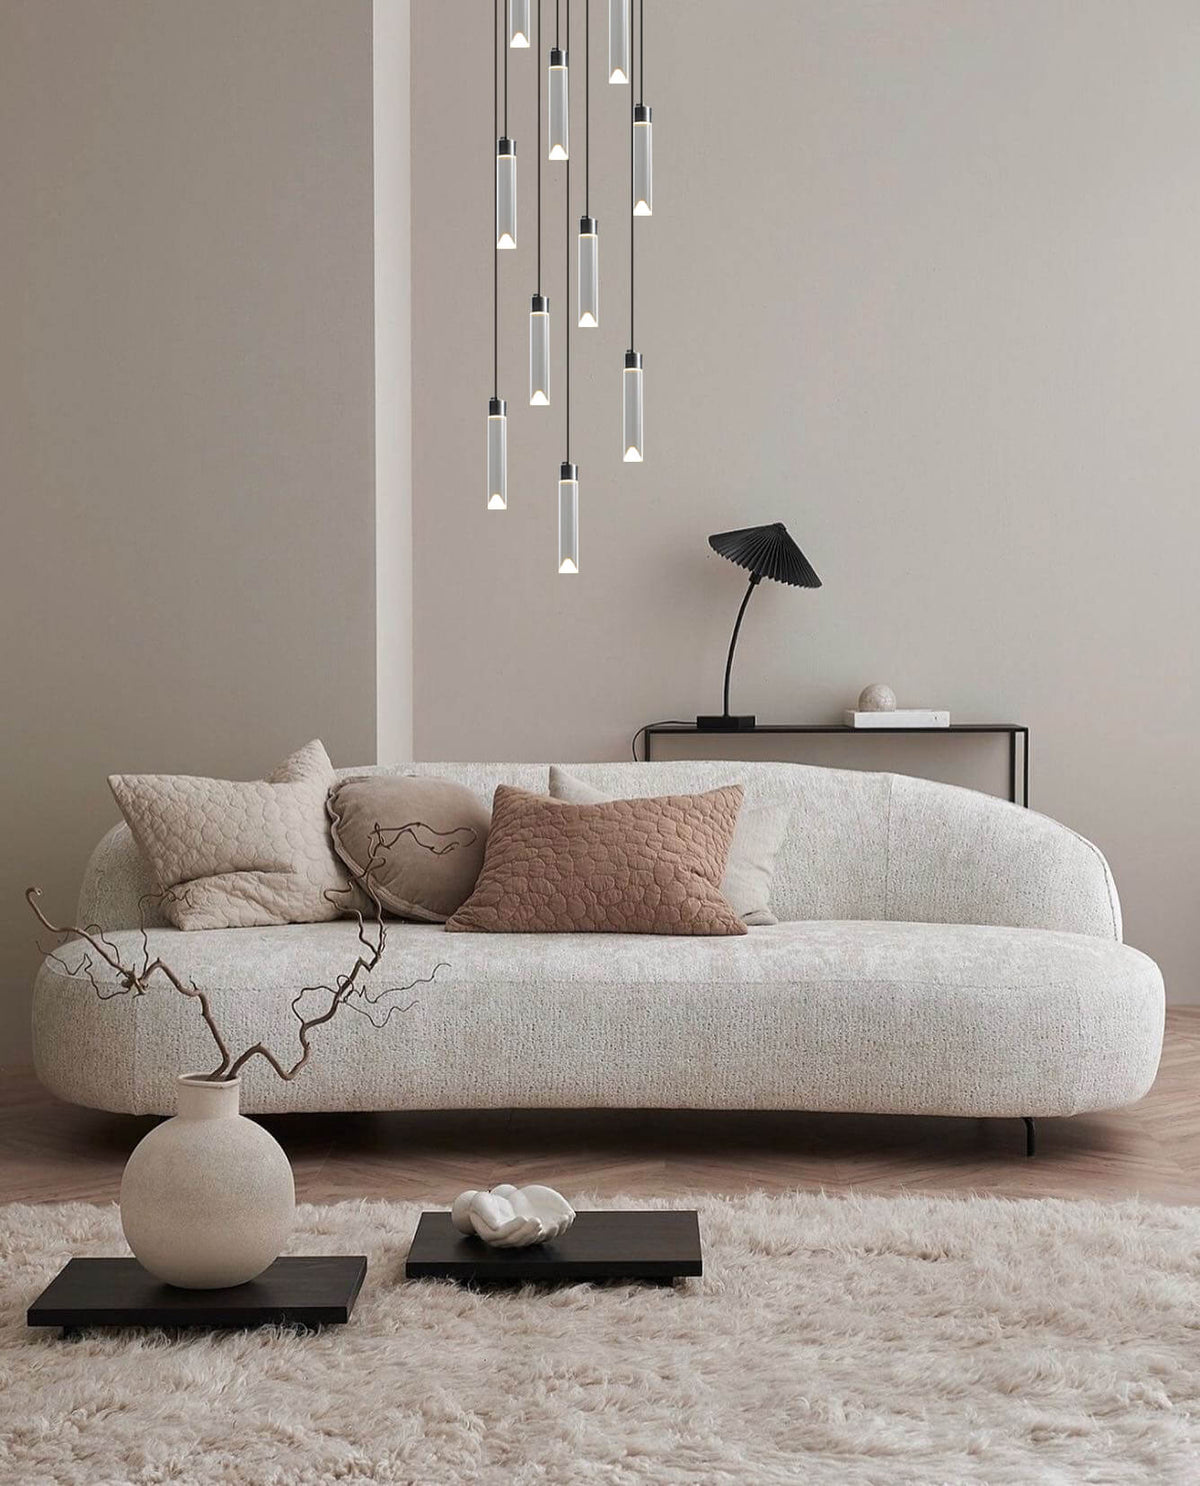 multi crystal cylinder pendant light for cozy living room